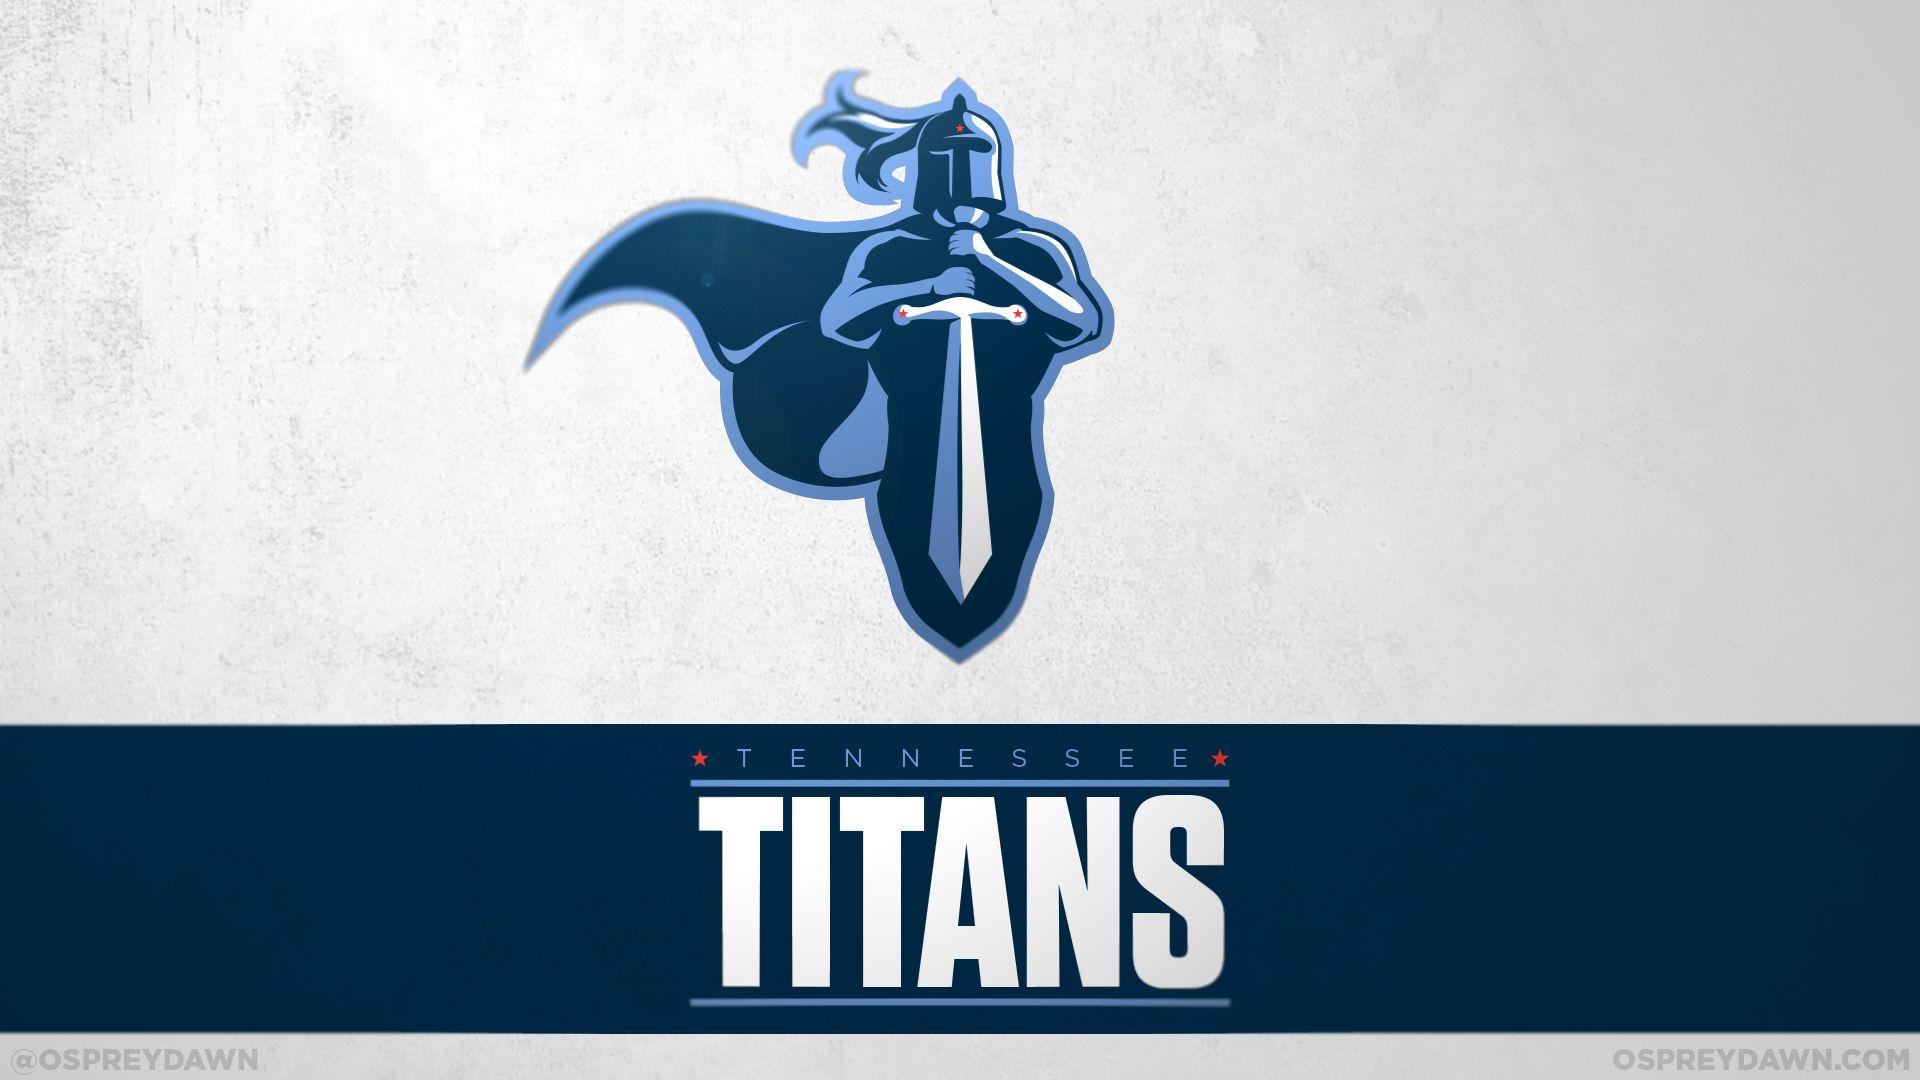 NFL Titans Logo - The Tennessee Titans - Osprey Dawn